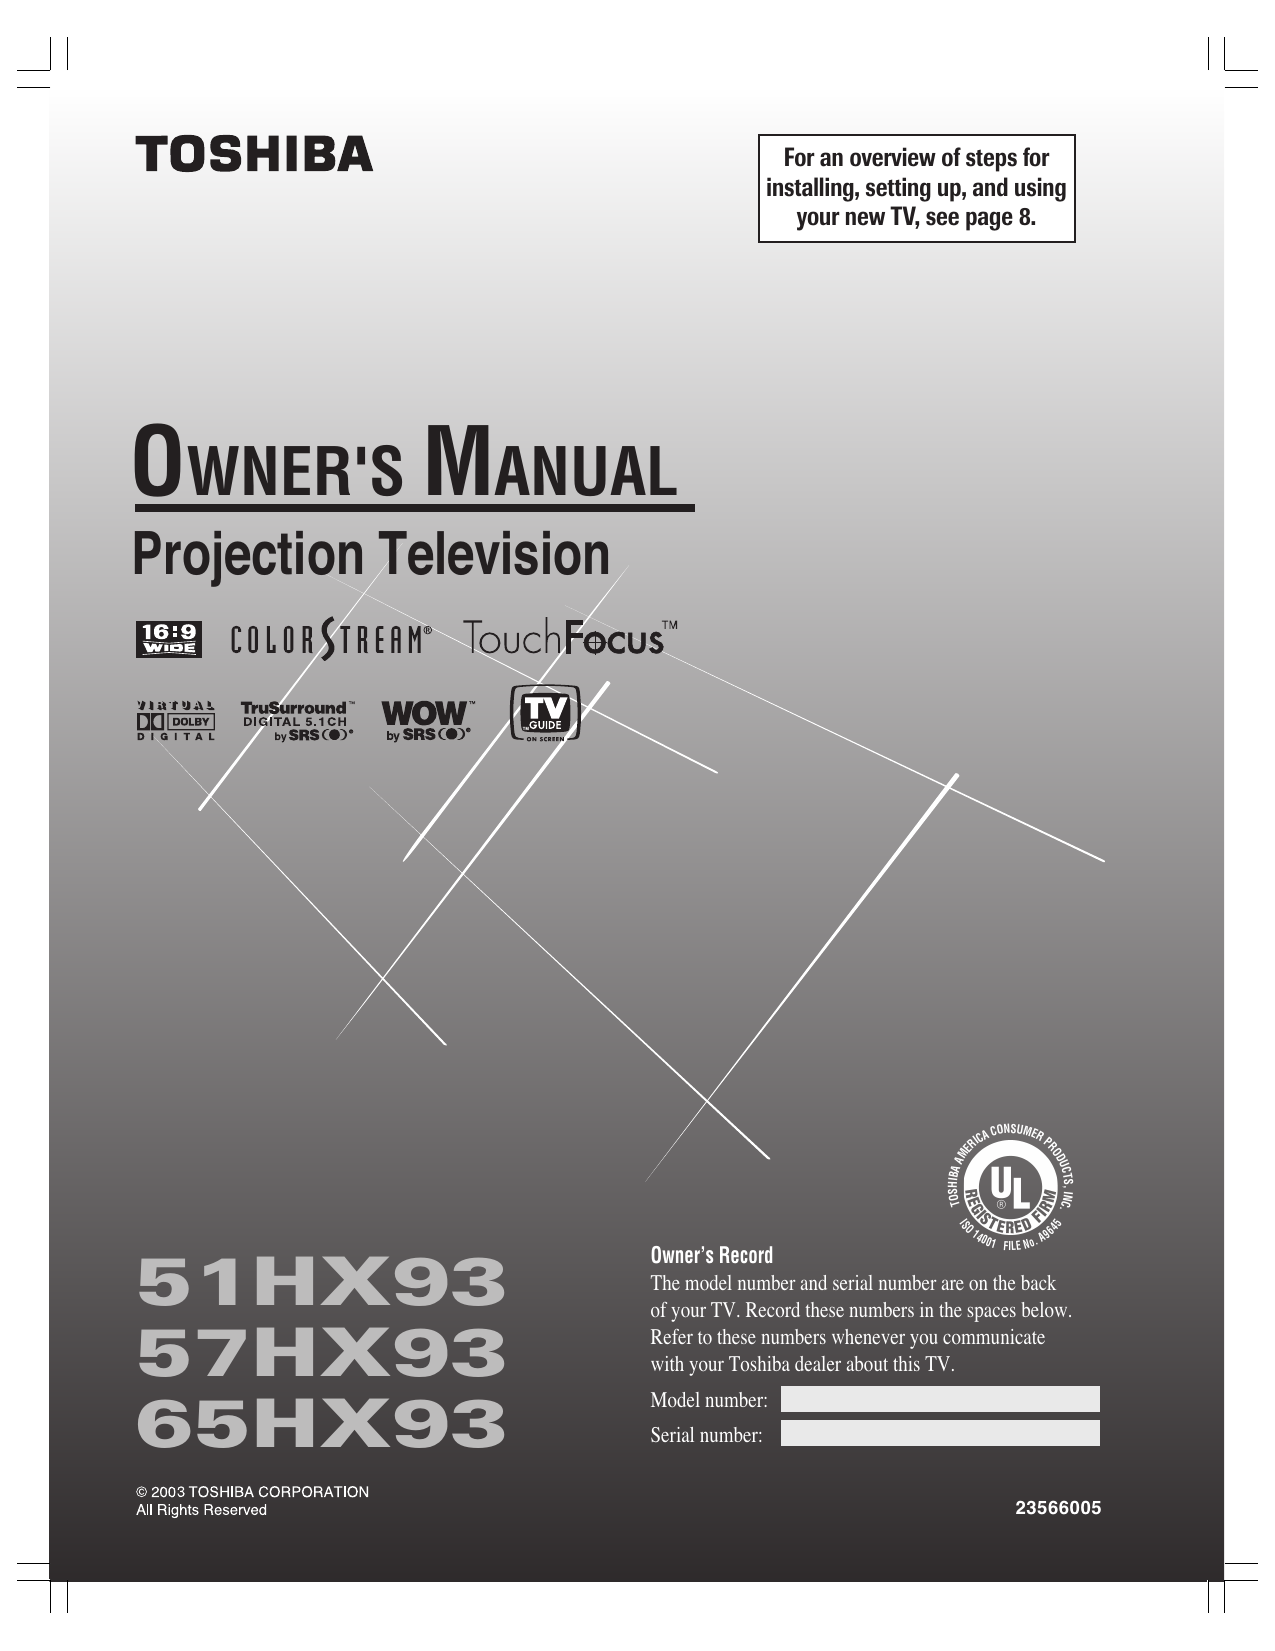 Toshiba 51HX93, 57HX93, 65HX93 Owner's Manual | Manualzz